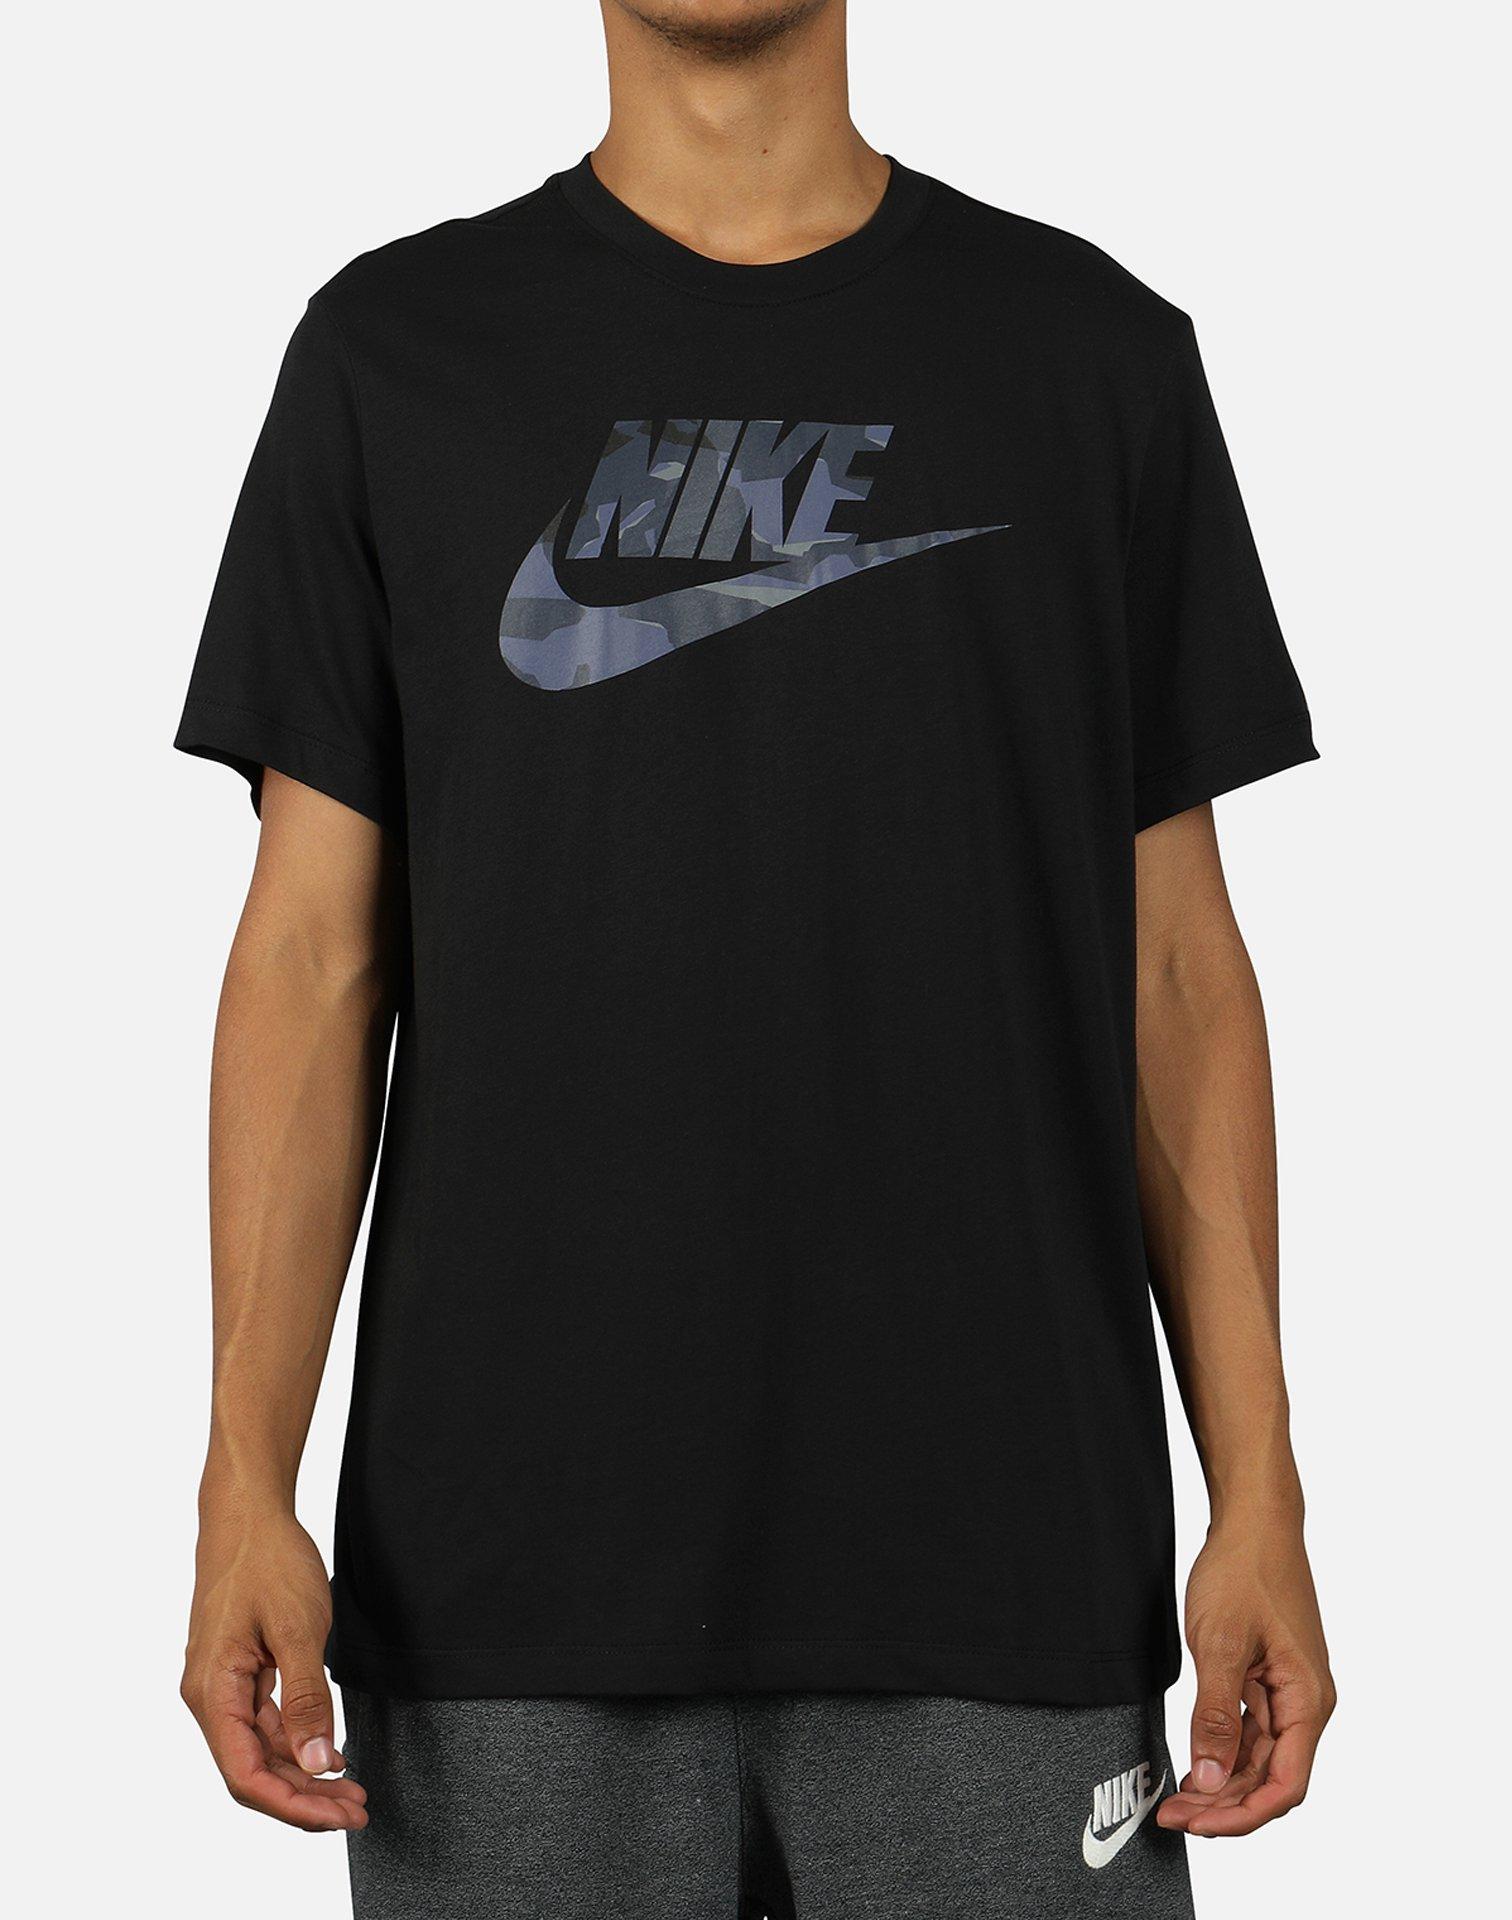 Nike Cotton Nsw Camo Logo Tee in Black for Men - Lyst